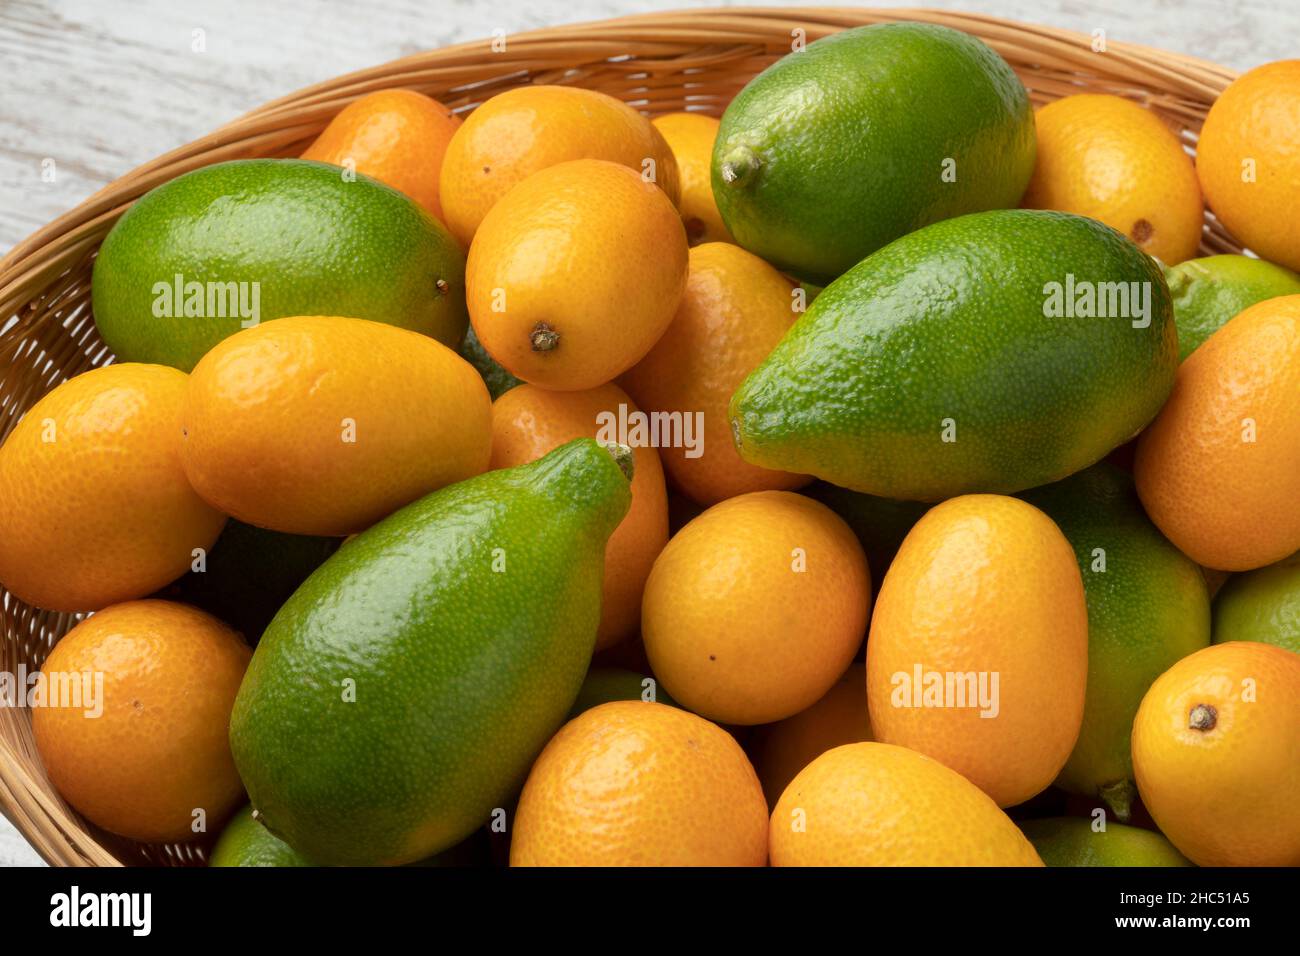 Basket with fresh green whole limequats and orange kumquats close up Stock Photo